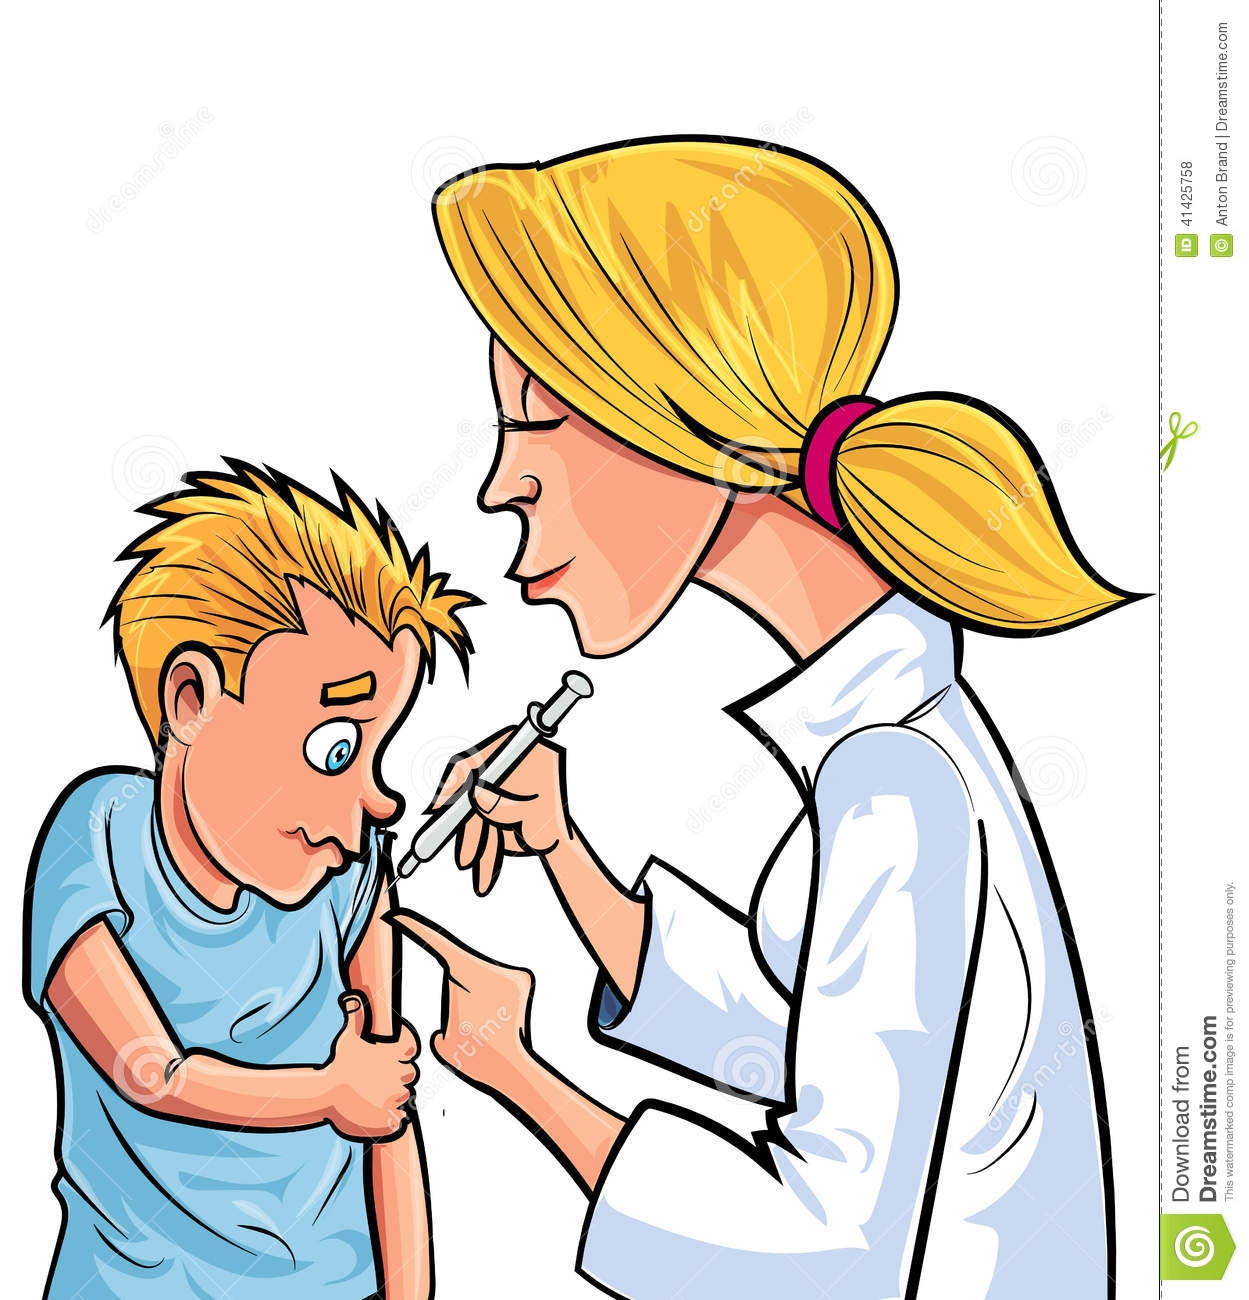 Covid Vaccination Cartoon Images - Mark Knight cartoon on Australia's